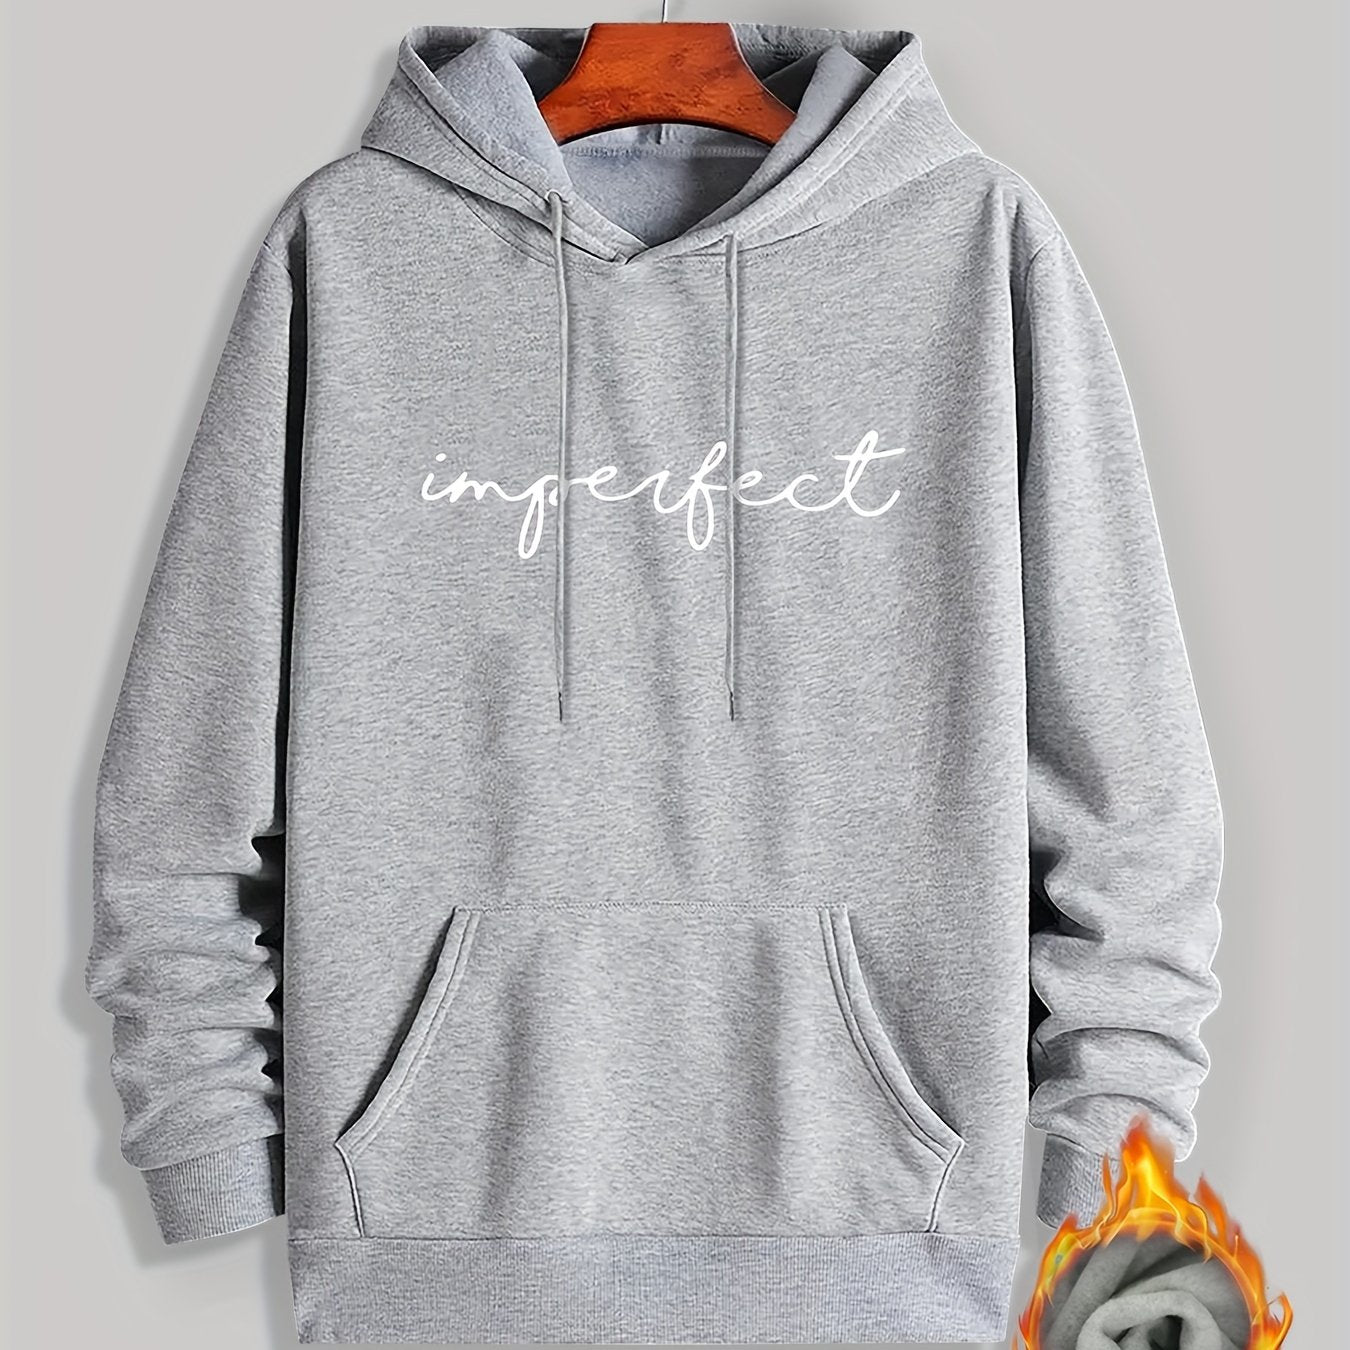 Imperfect Men's Christian Pullover Hooded Sweatshirt claimedbygoddesigns